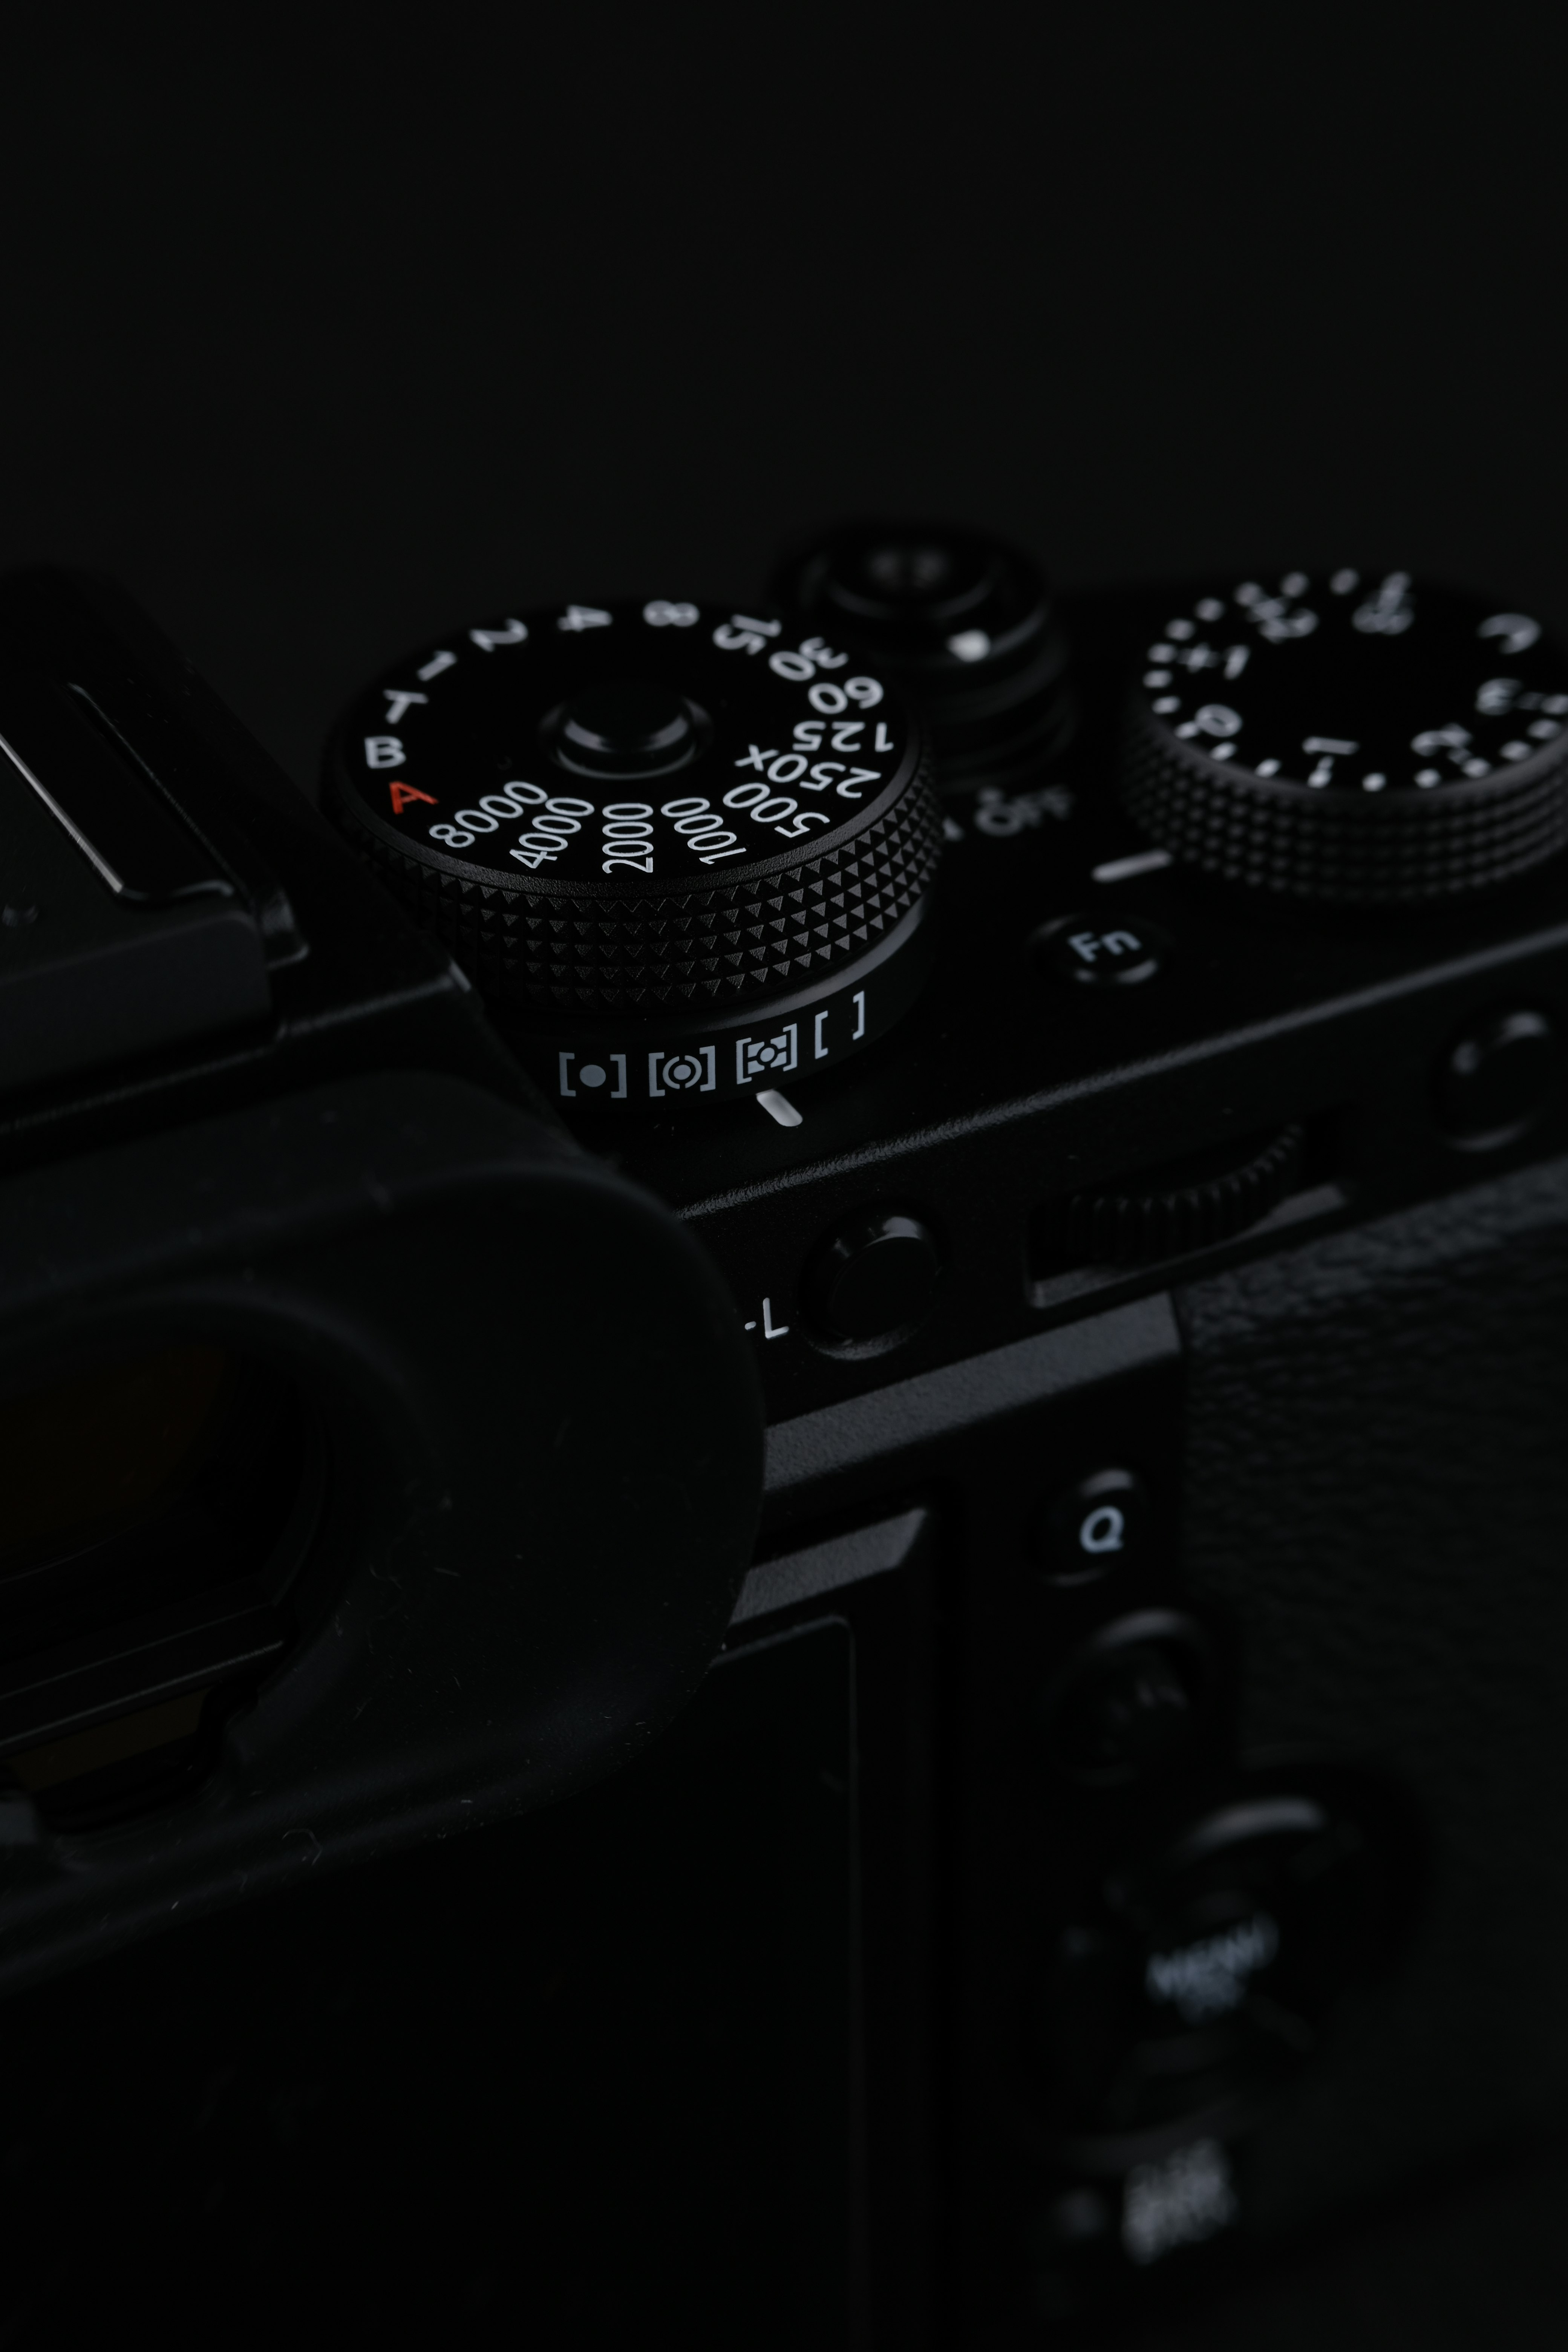 Fujifilm X-T3 photo product or photo camera gear.